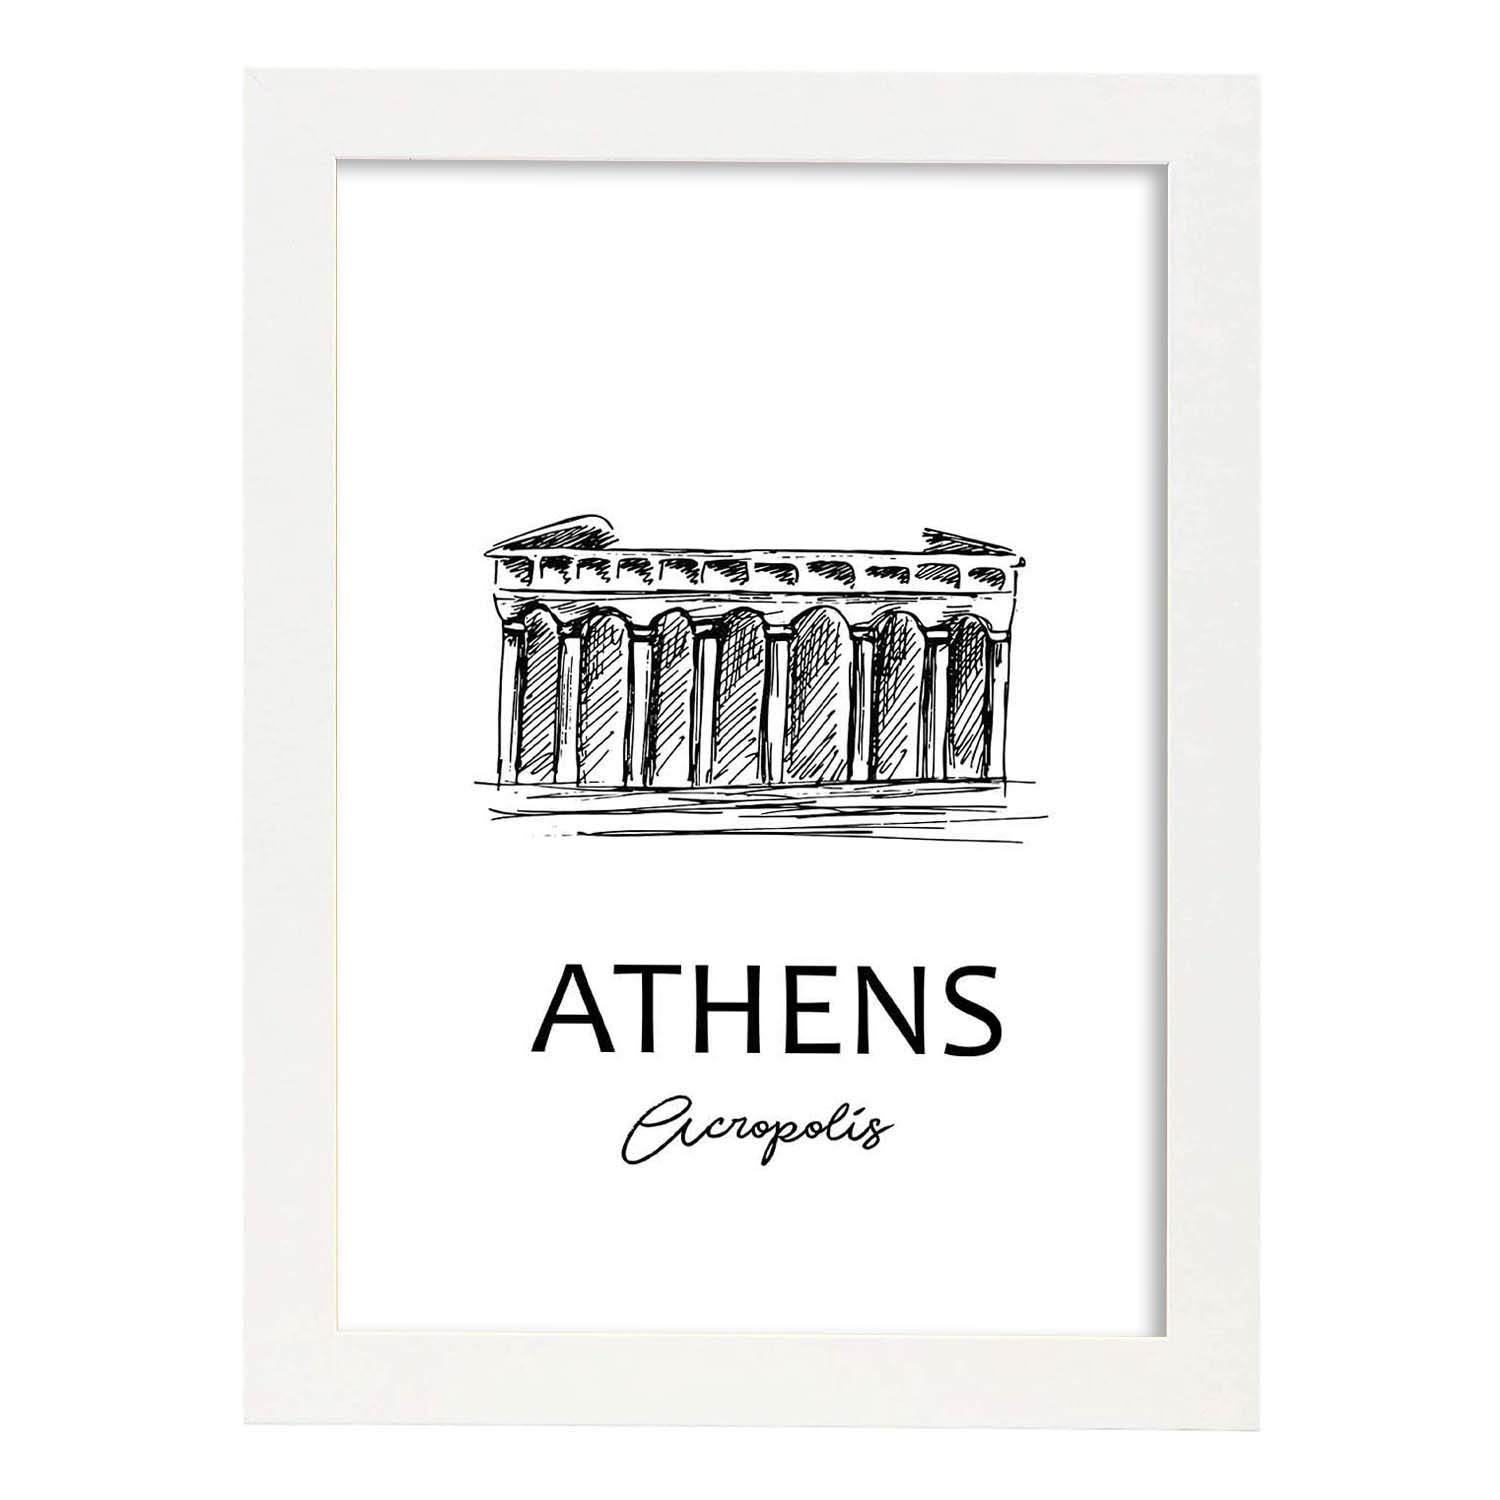 Poster de Atenas - Acropolis. Láminas con monumentos de ciudades.-Artwork-Nacnic-A3-Marco Blanco-Nacnic Estudio SL